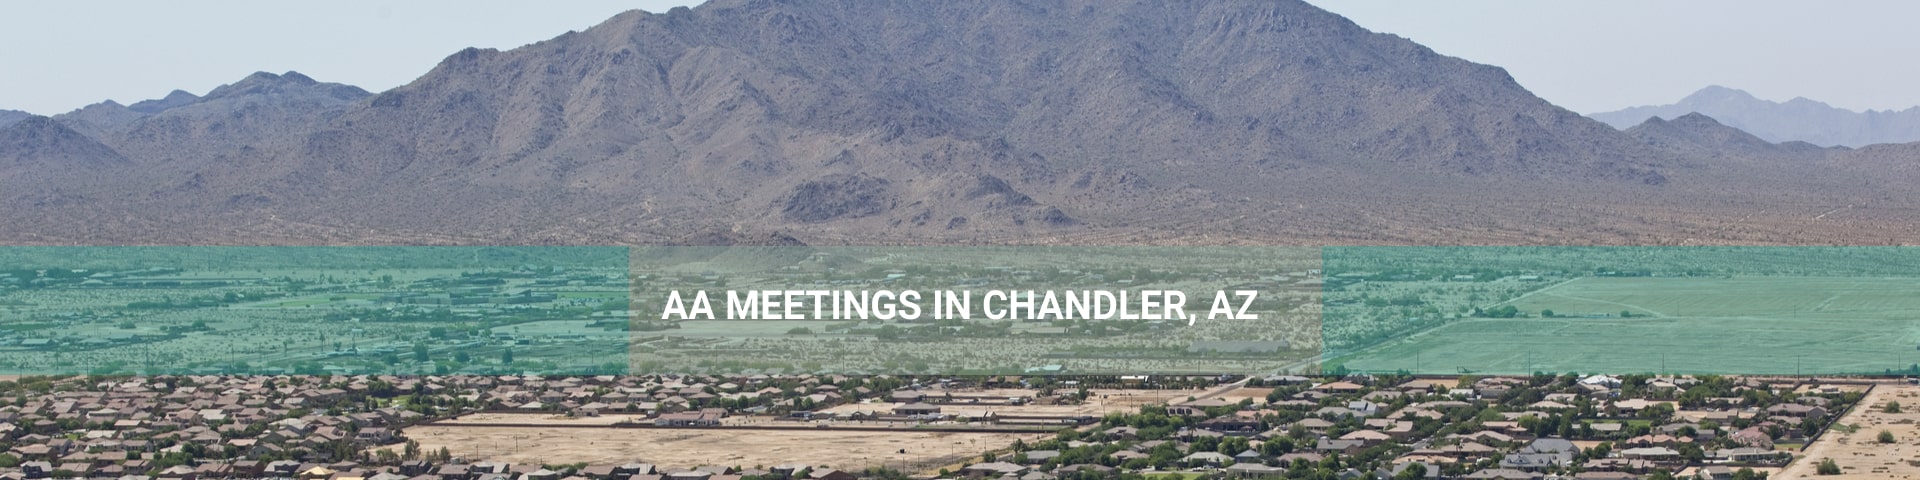 Chandler, Arizona overview.